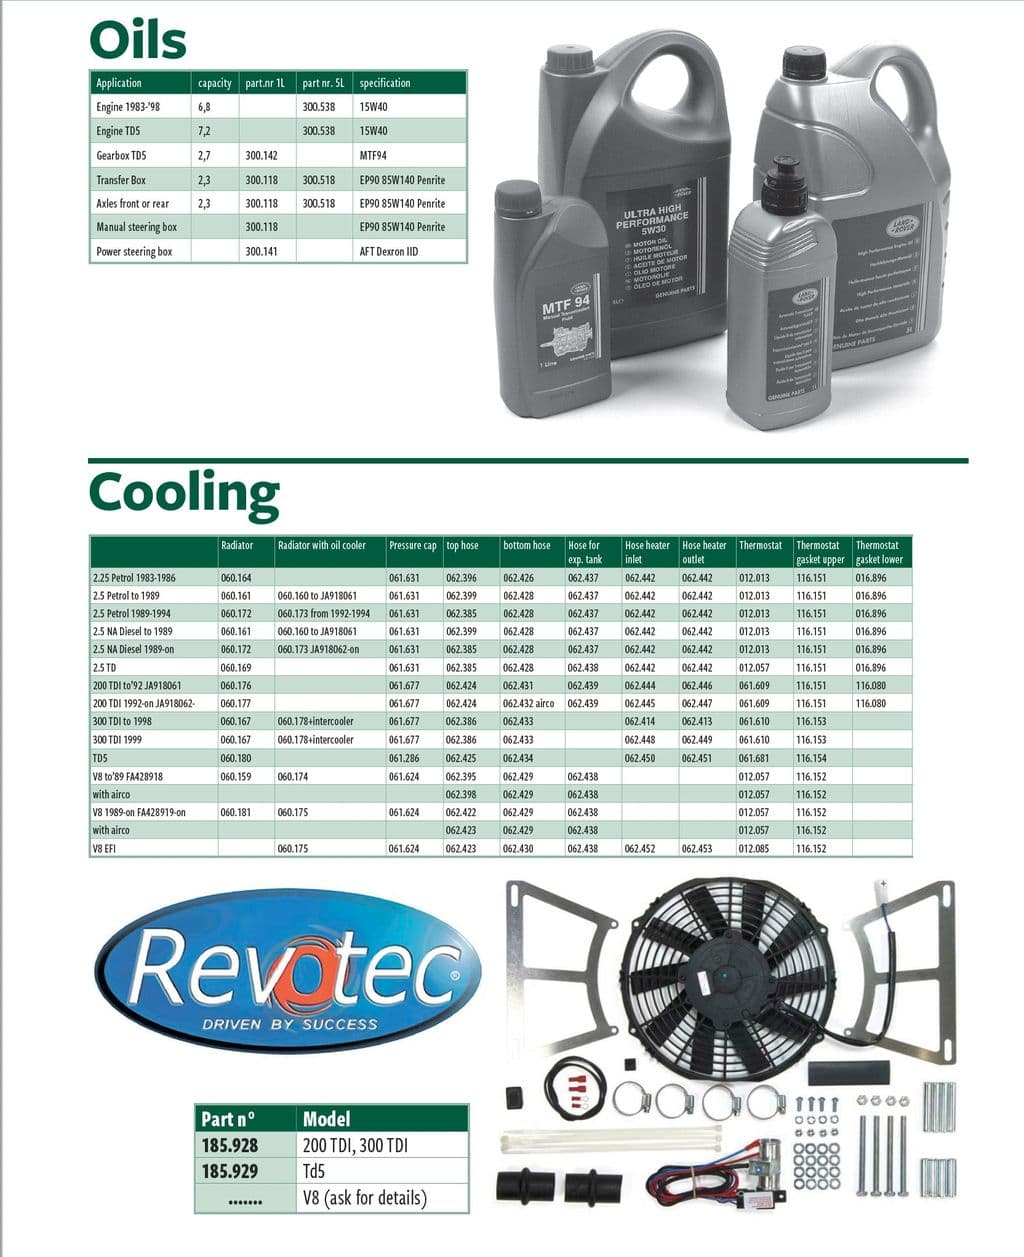 Oils & cooling - Refroidissement - Refroidissement - Land Rover Defender 90-110 1984-2006 - Oils & cooling - 1